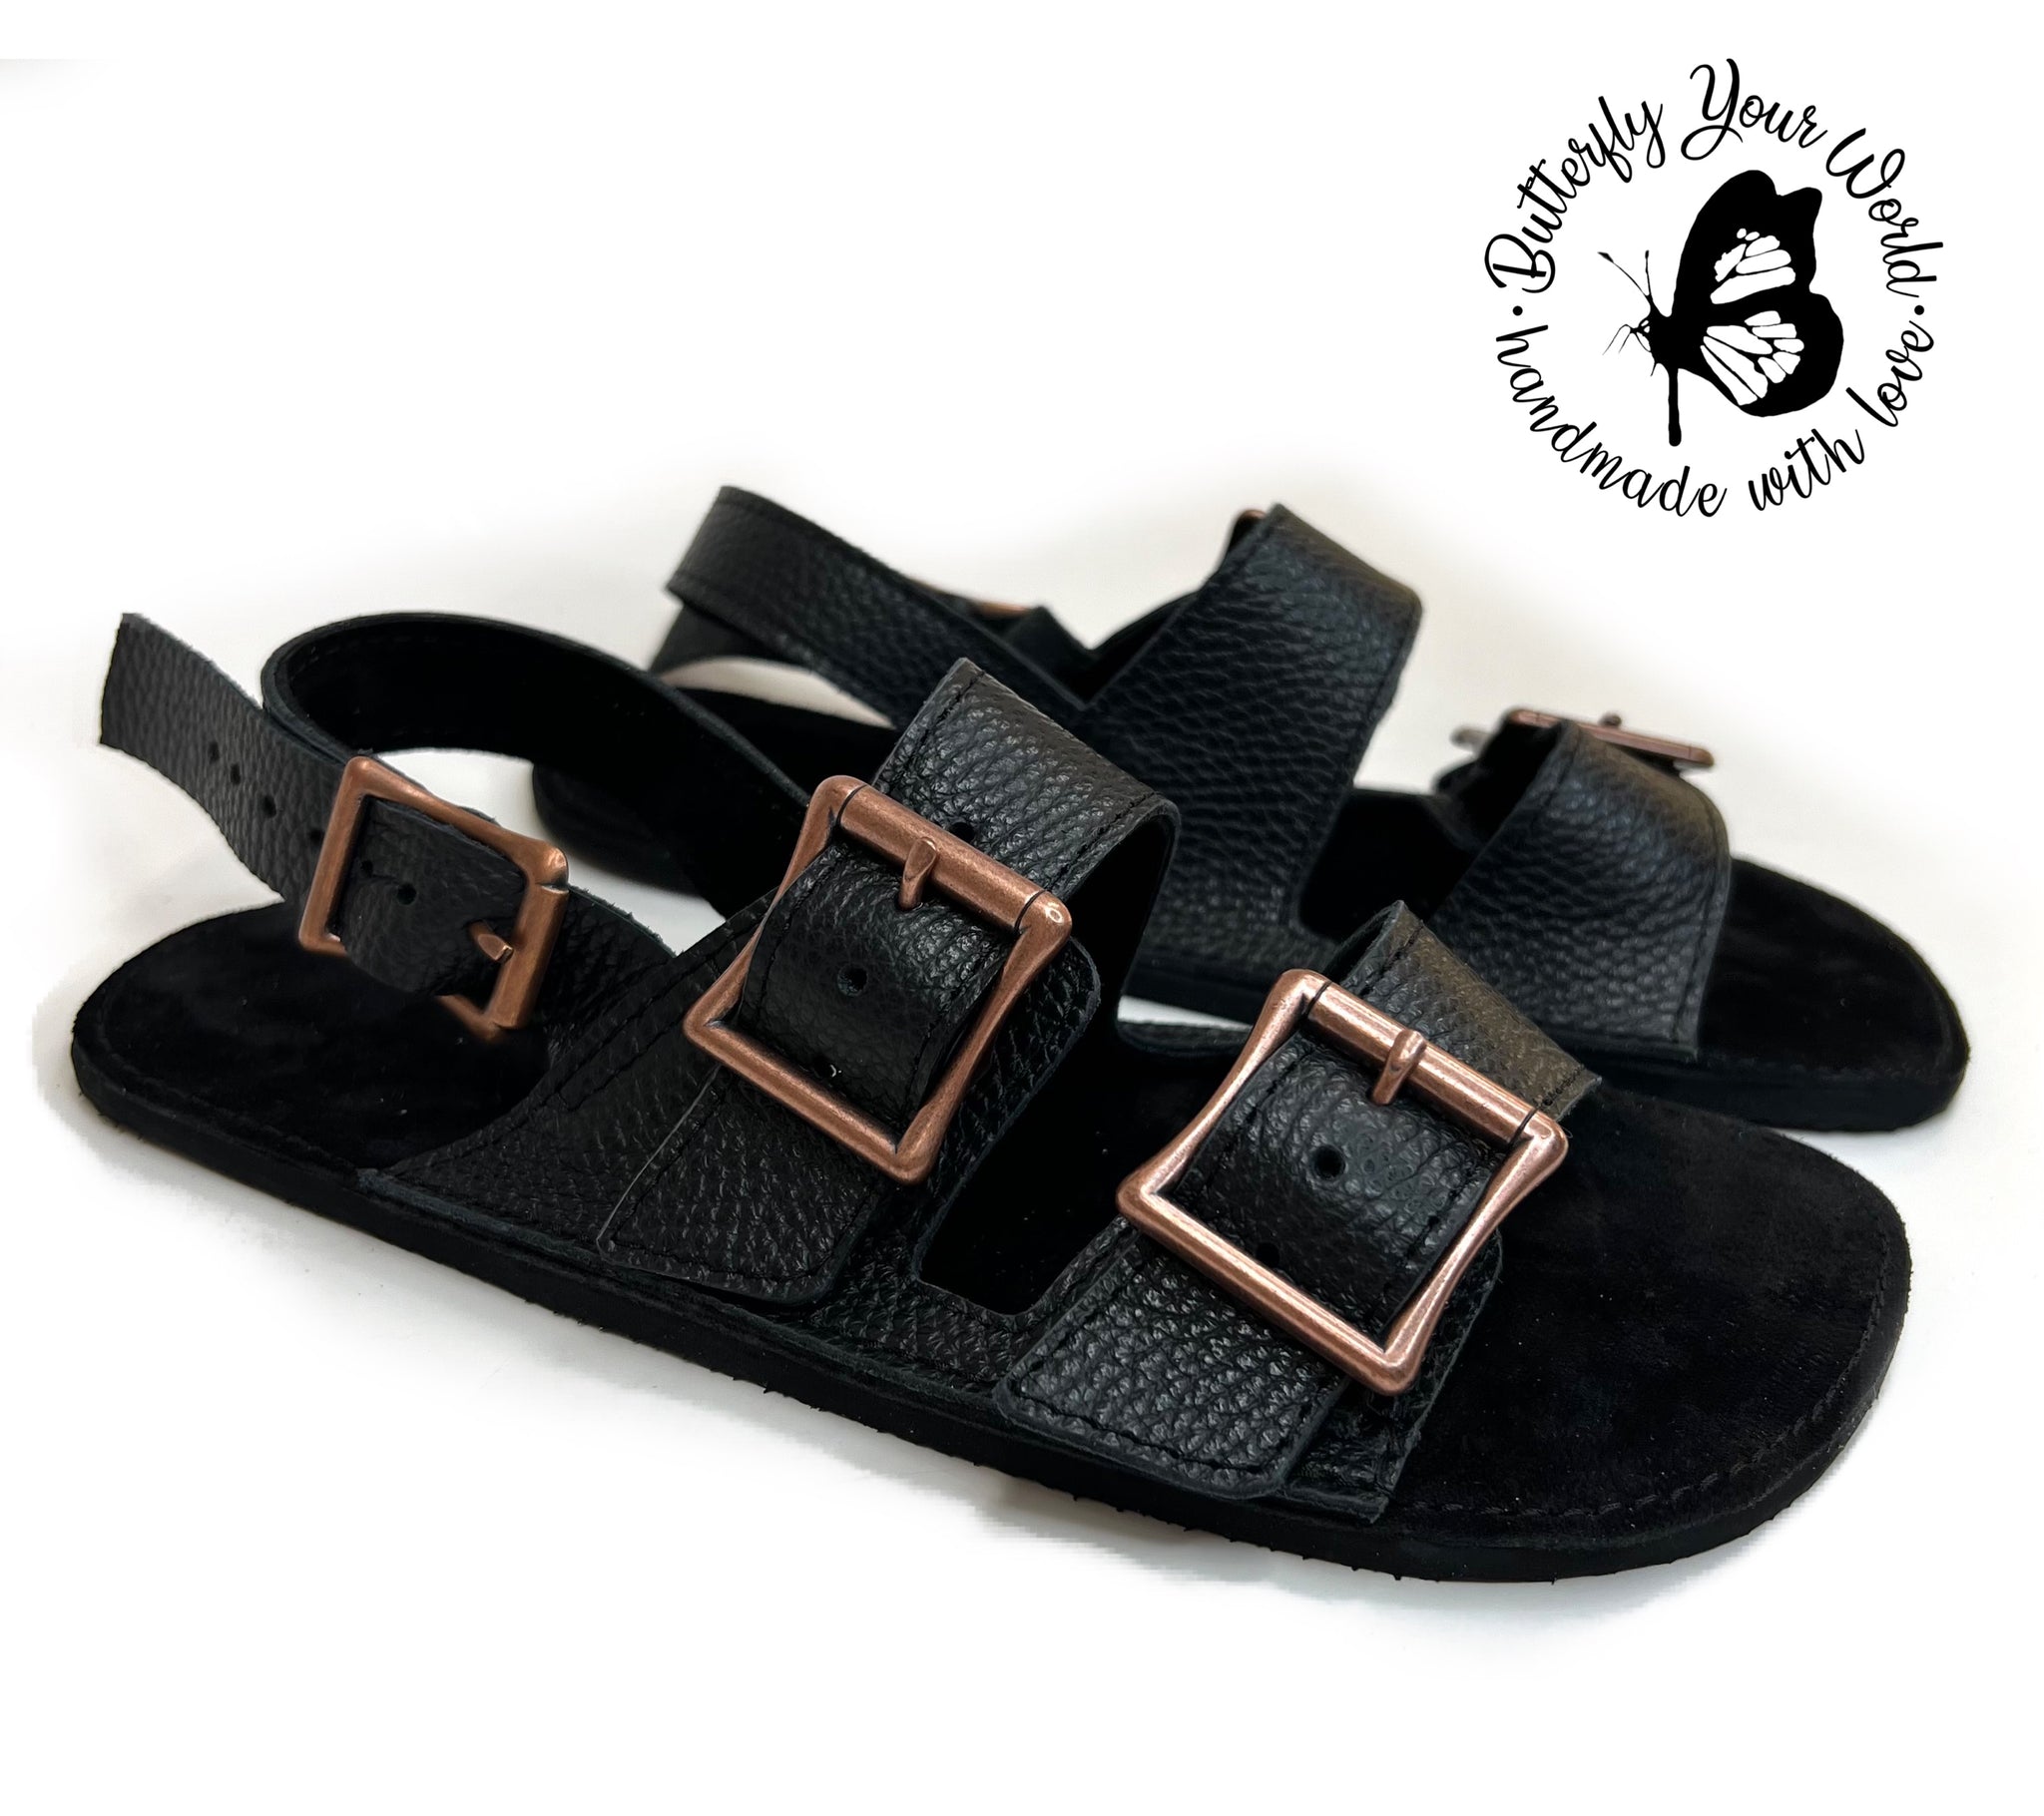 Women’s black leather buckle sandals